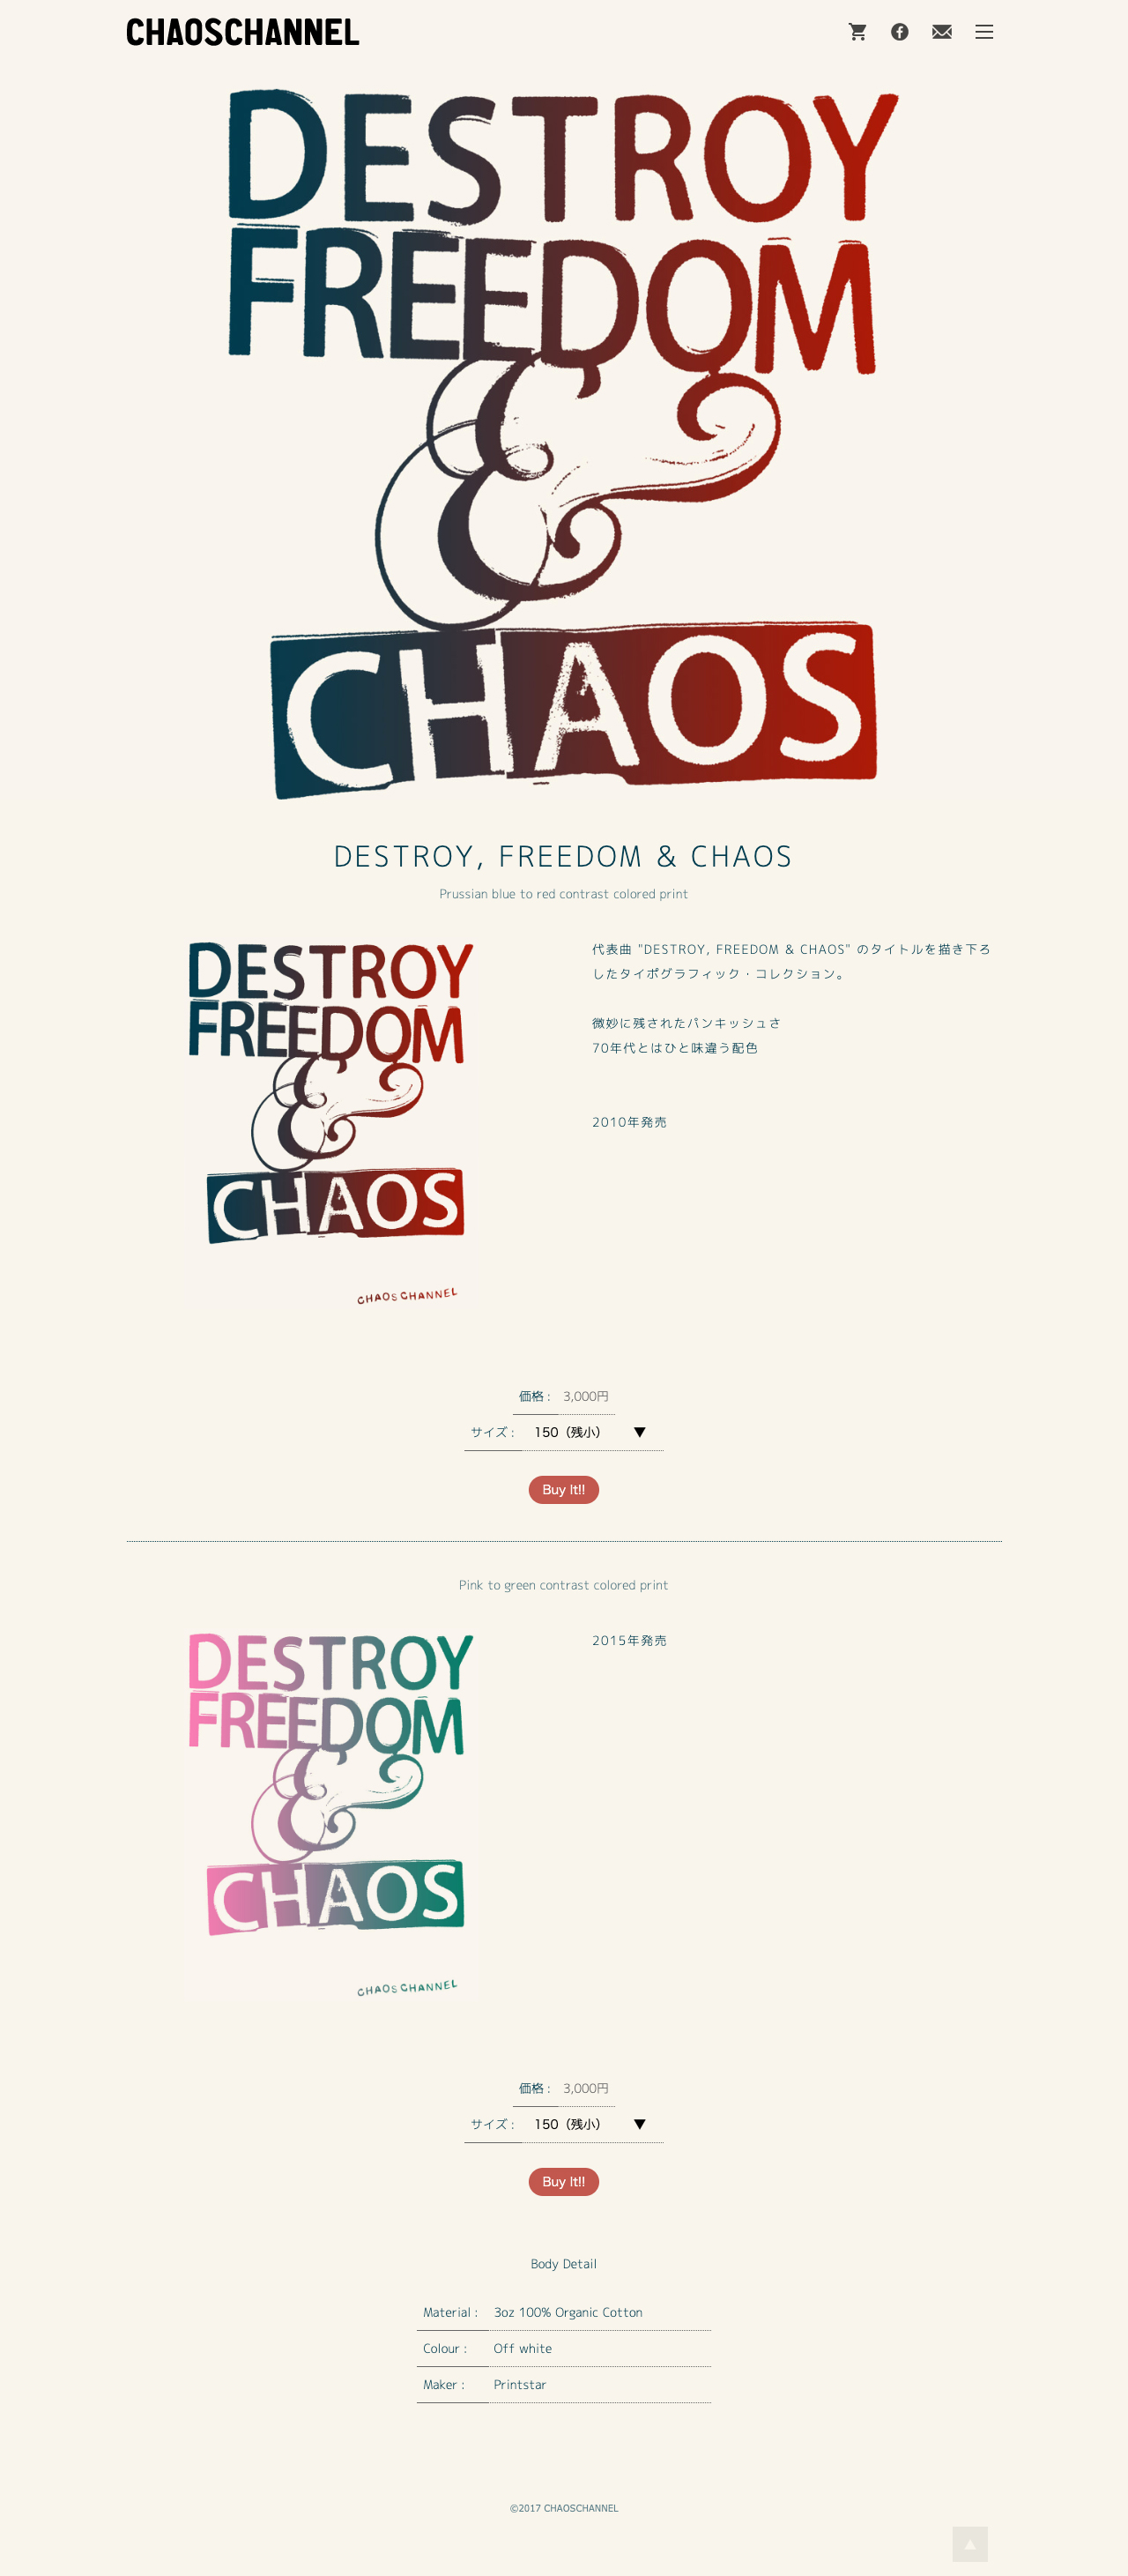 chaoschannel_c.jpg